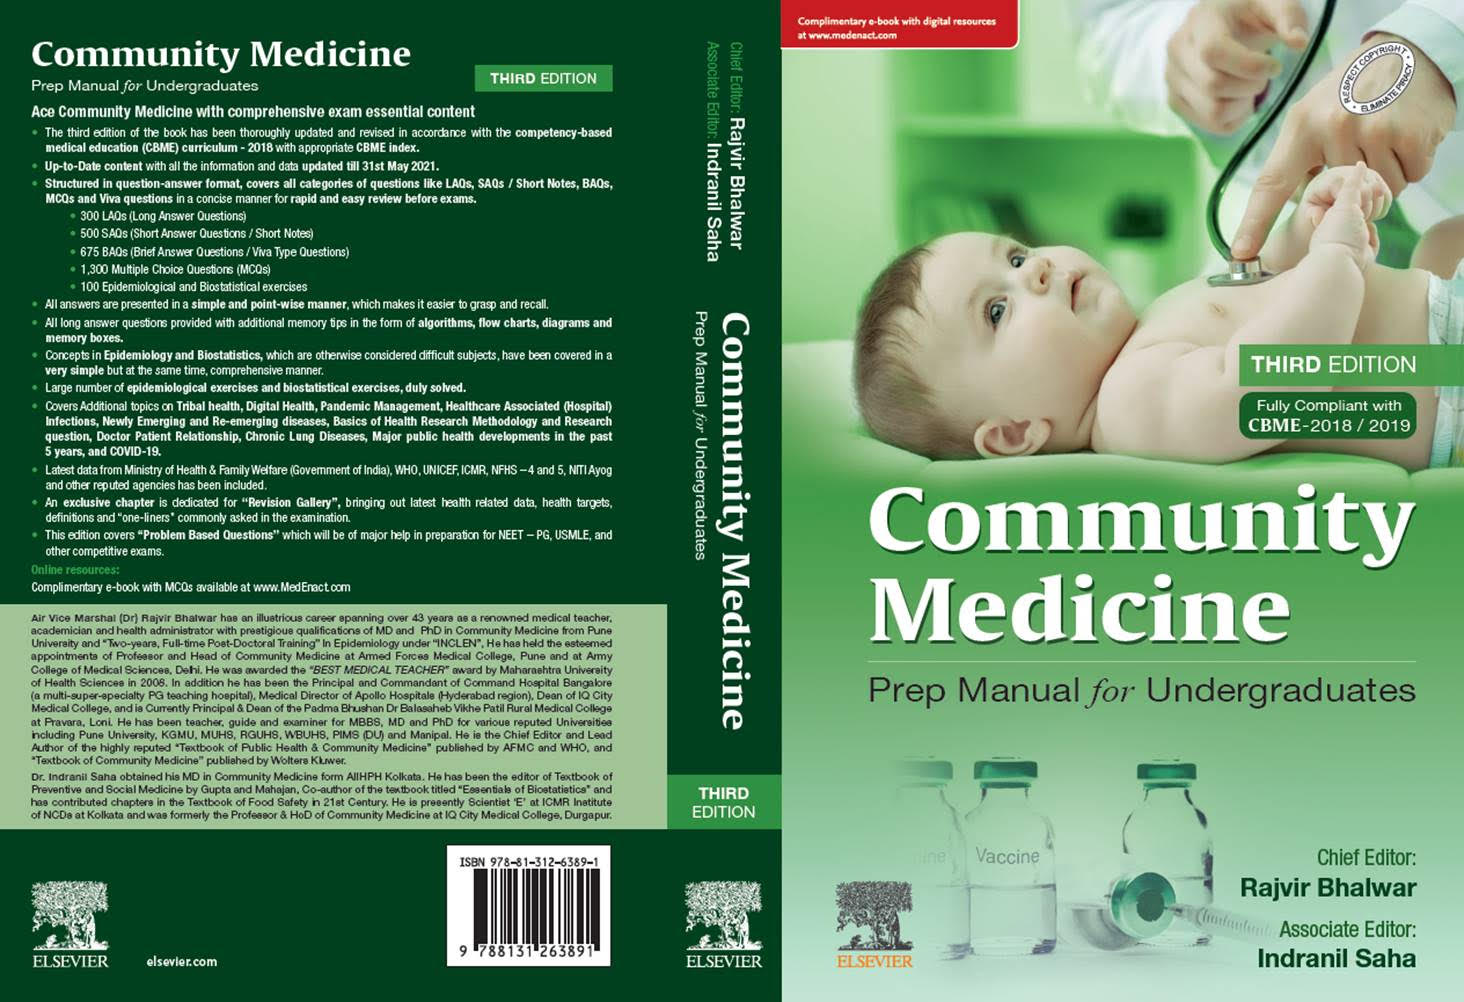 Community Medicine Preparatory Manual for Undergraduates, 3rd Edition